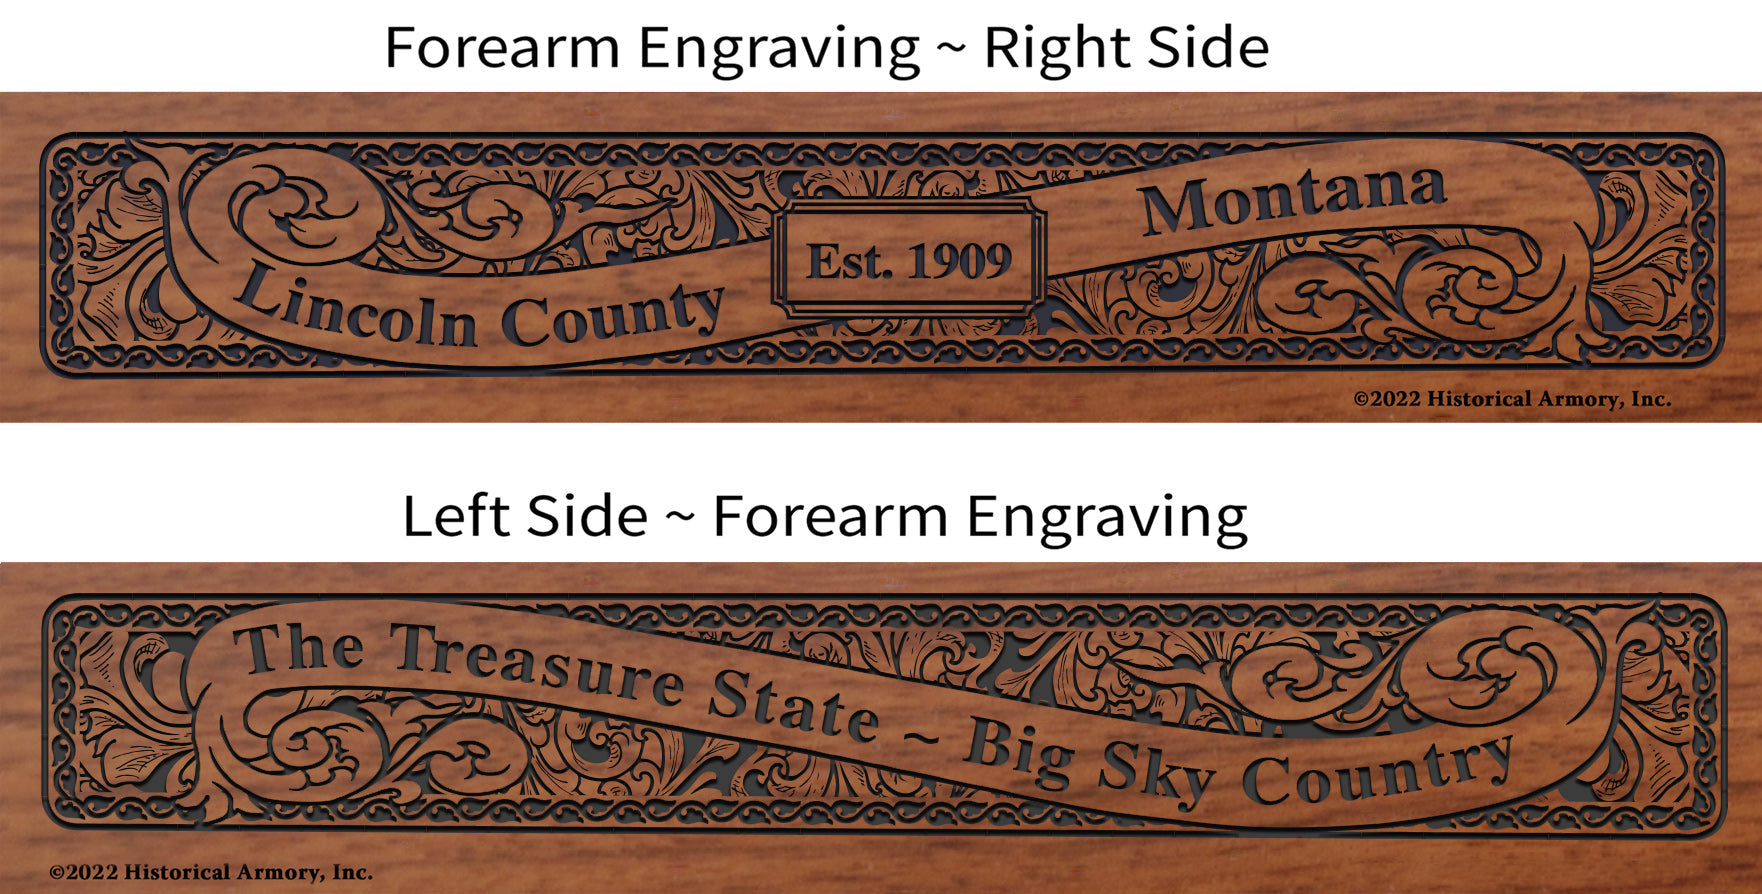 Lincoln County Montana Engraved Rifle Forearm